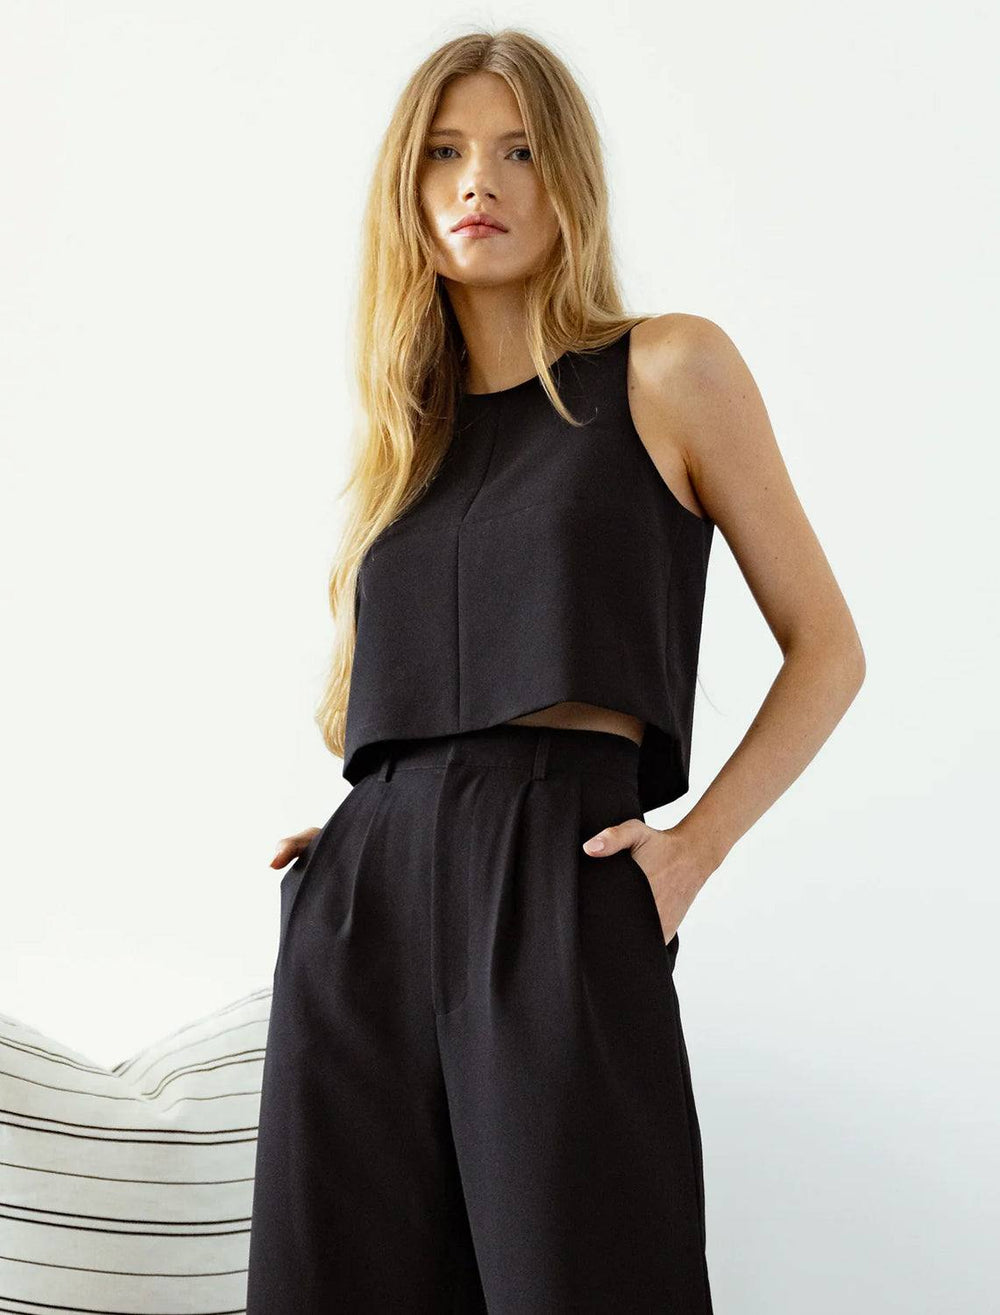 Model wearing Sundays NYC's rae top in black.